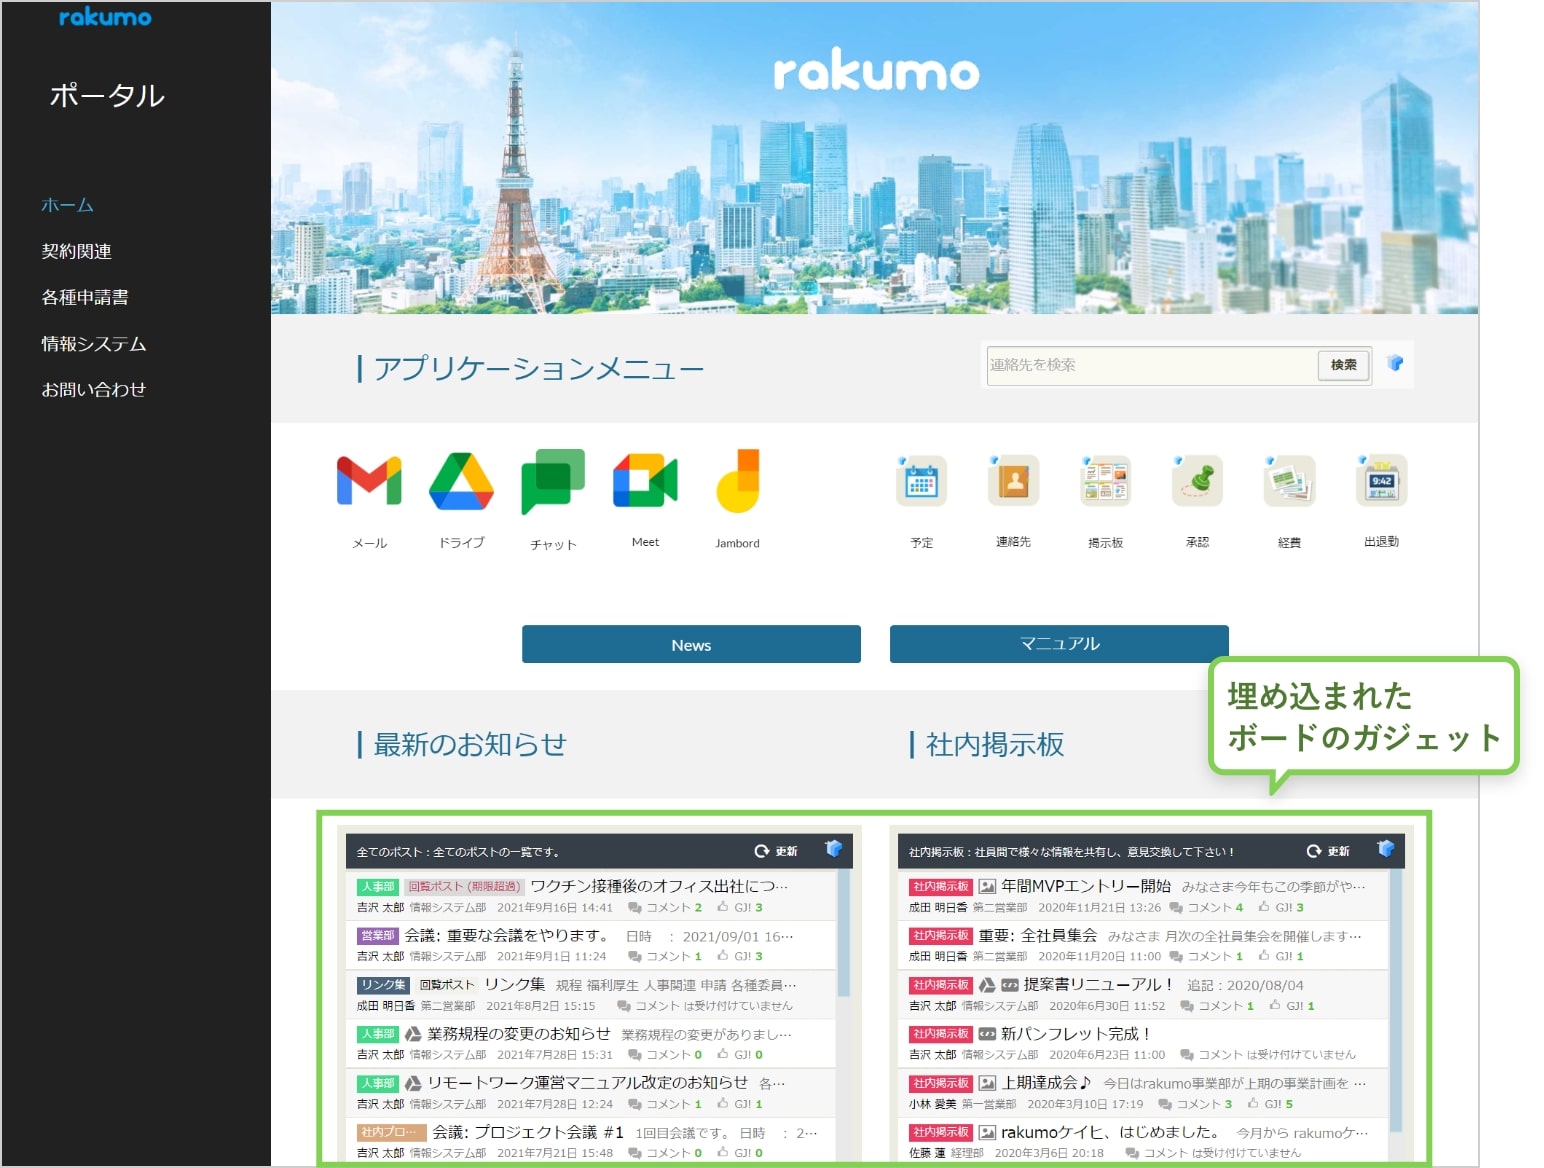 rakumo ボード：Google サイトで rakumo ボードのガジェットを埋め込んだ構築例